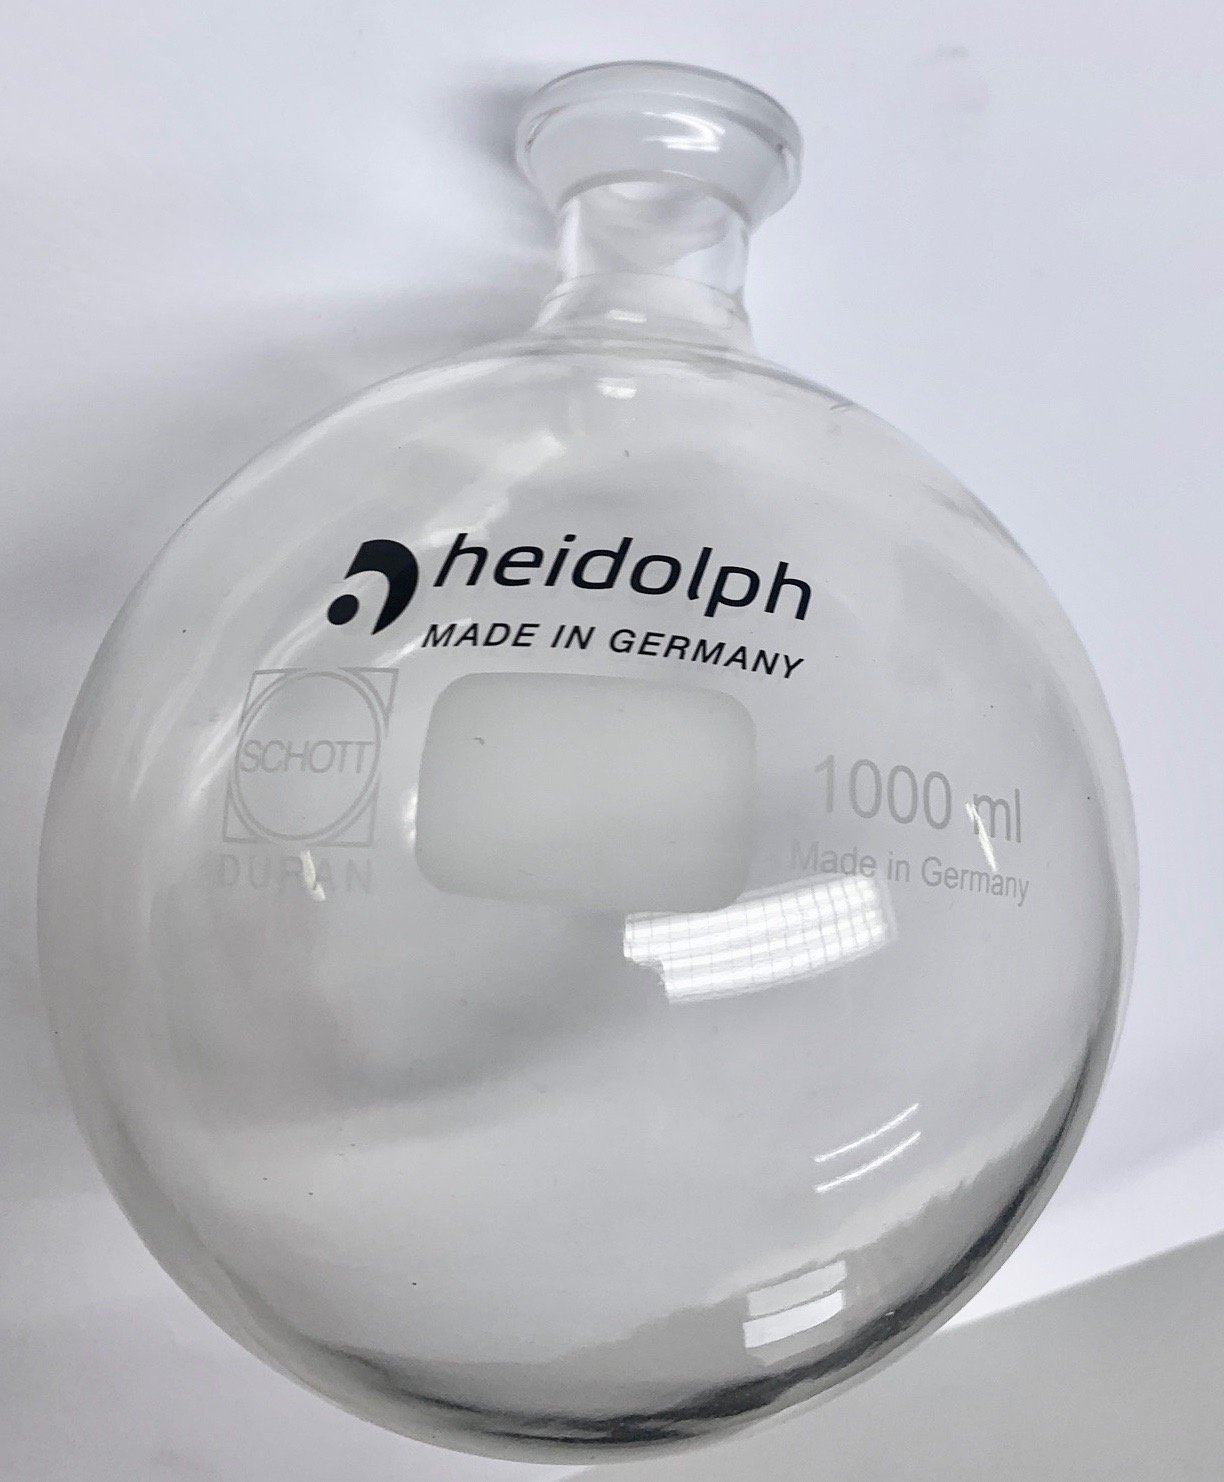 Heidolph Heidolph Coated receiving flask 1,000 ml